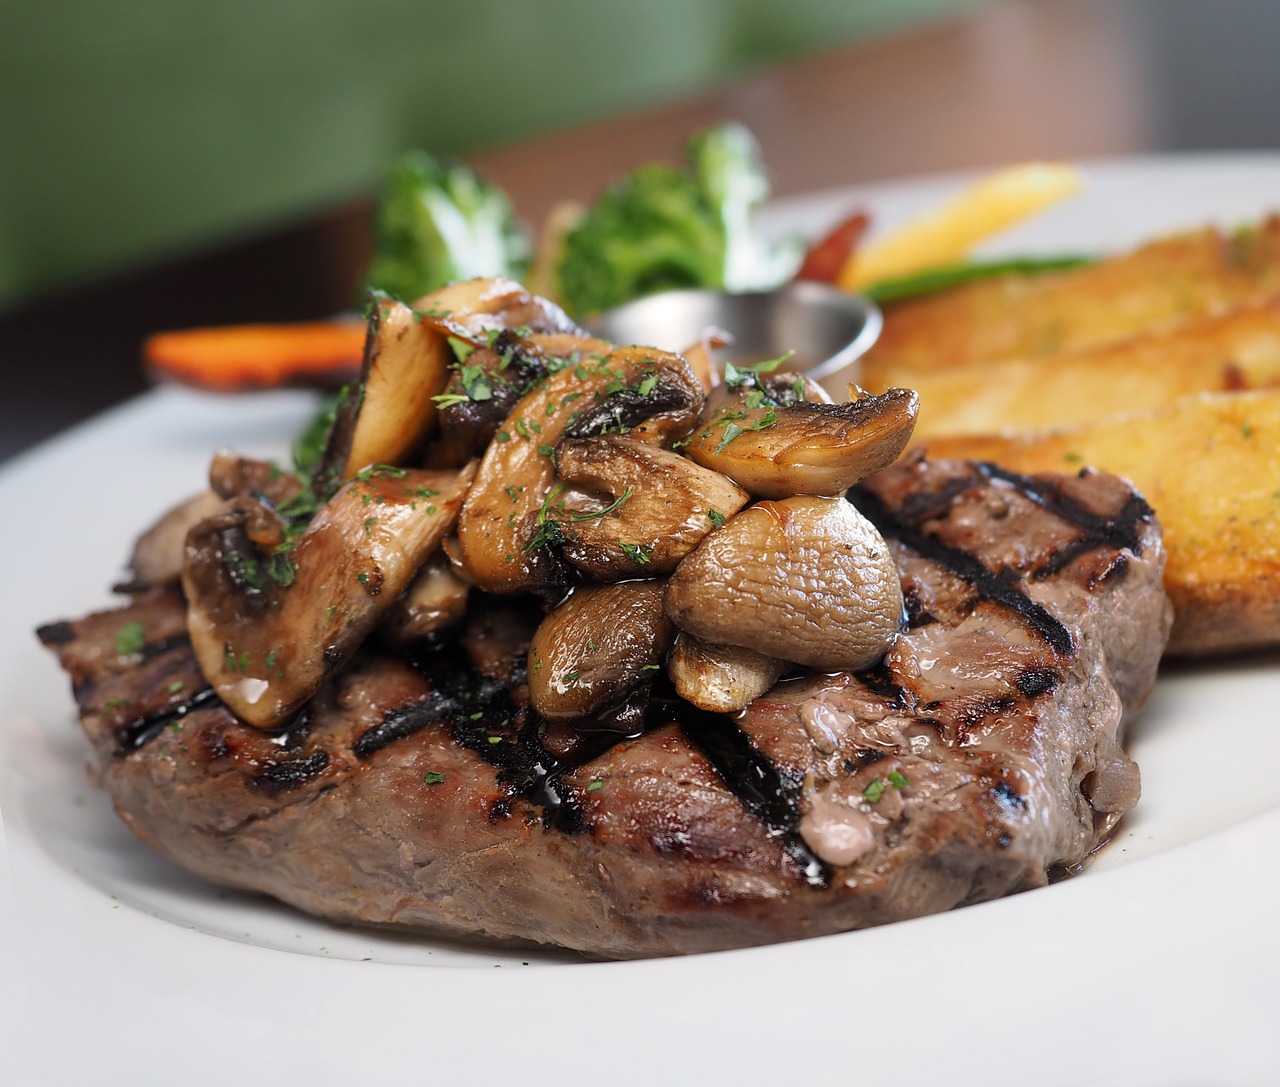 Salisbury Steak With Mushrooms